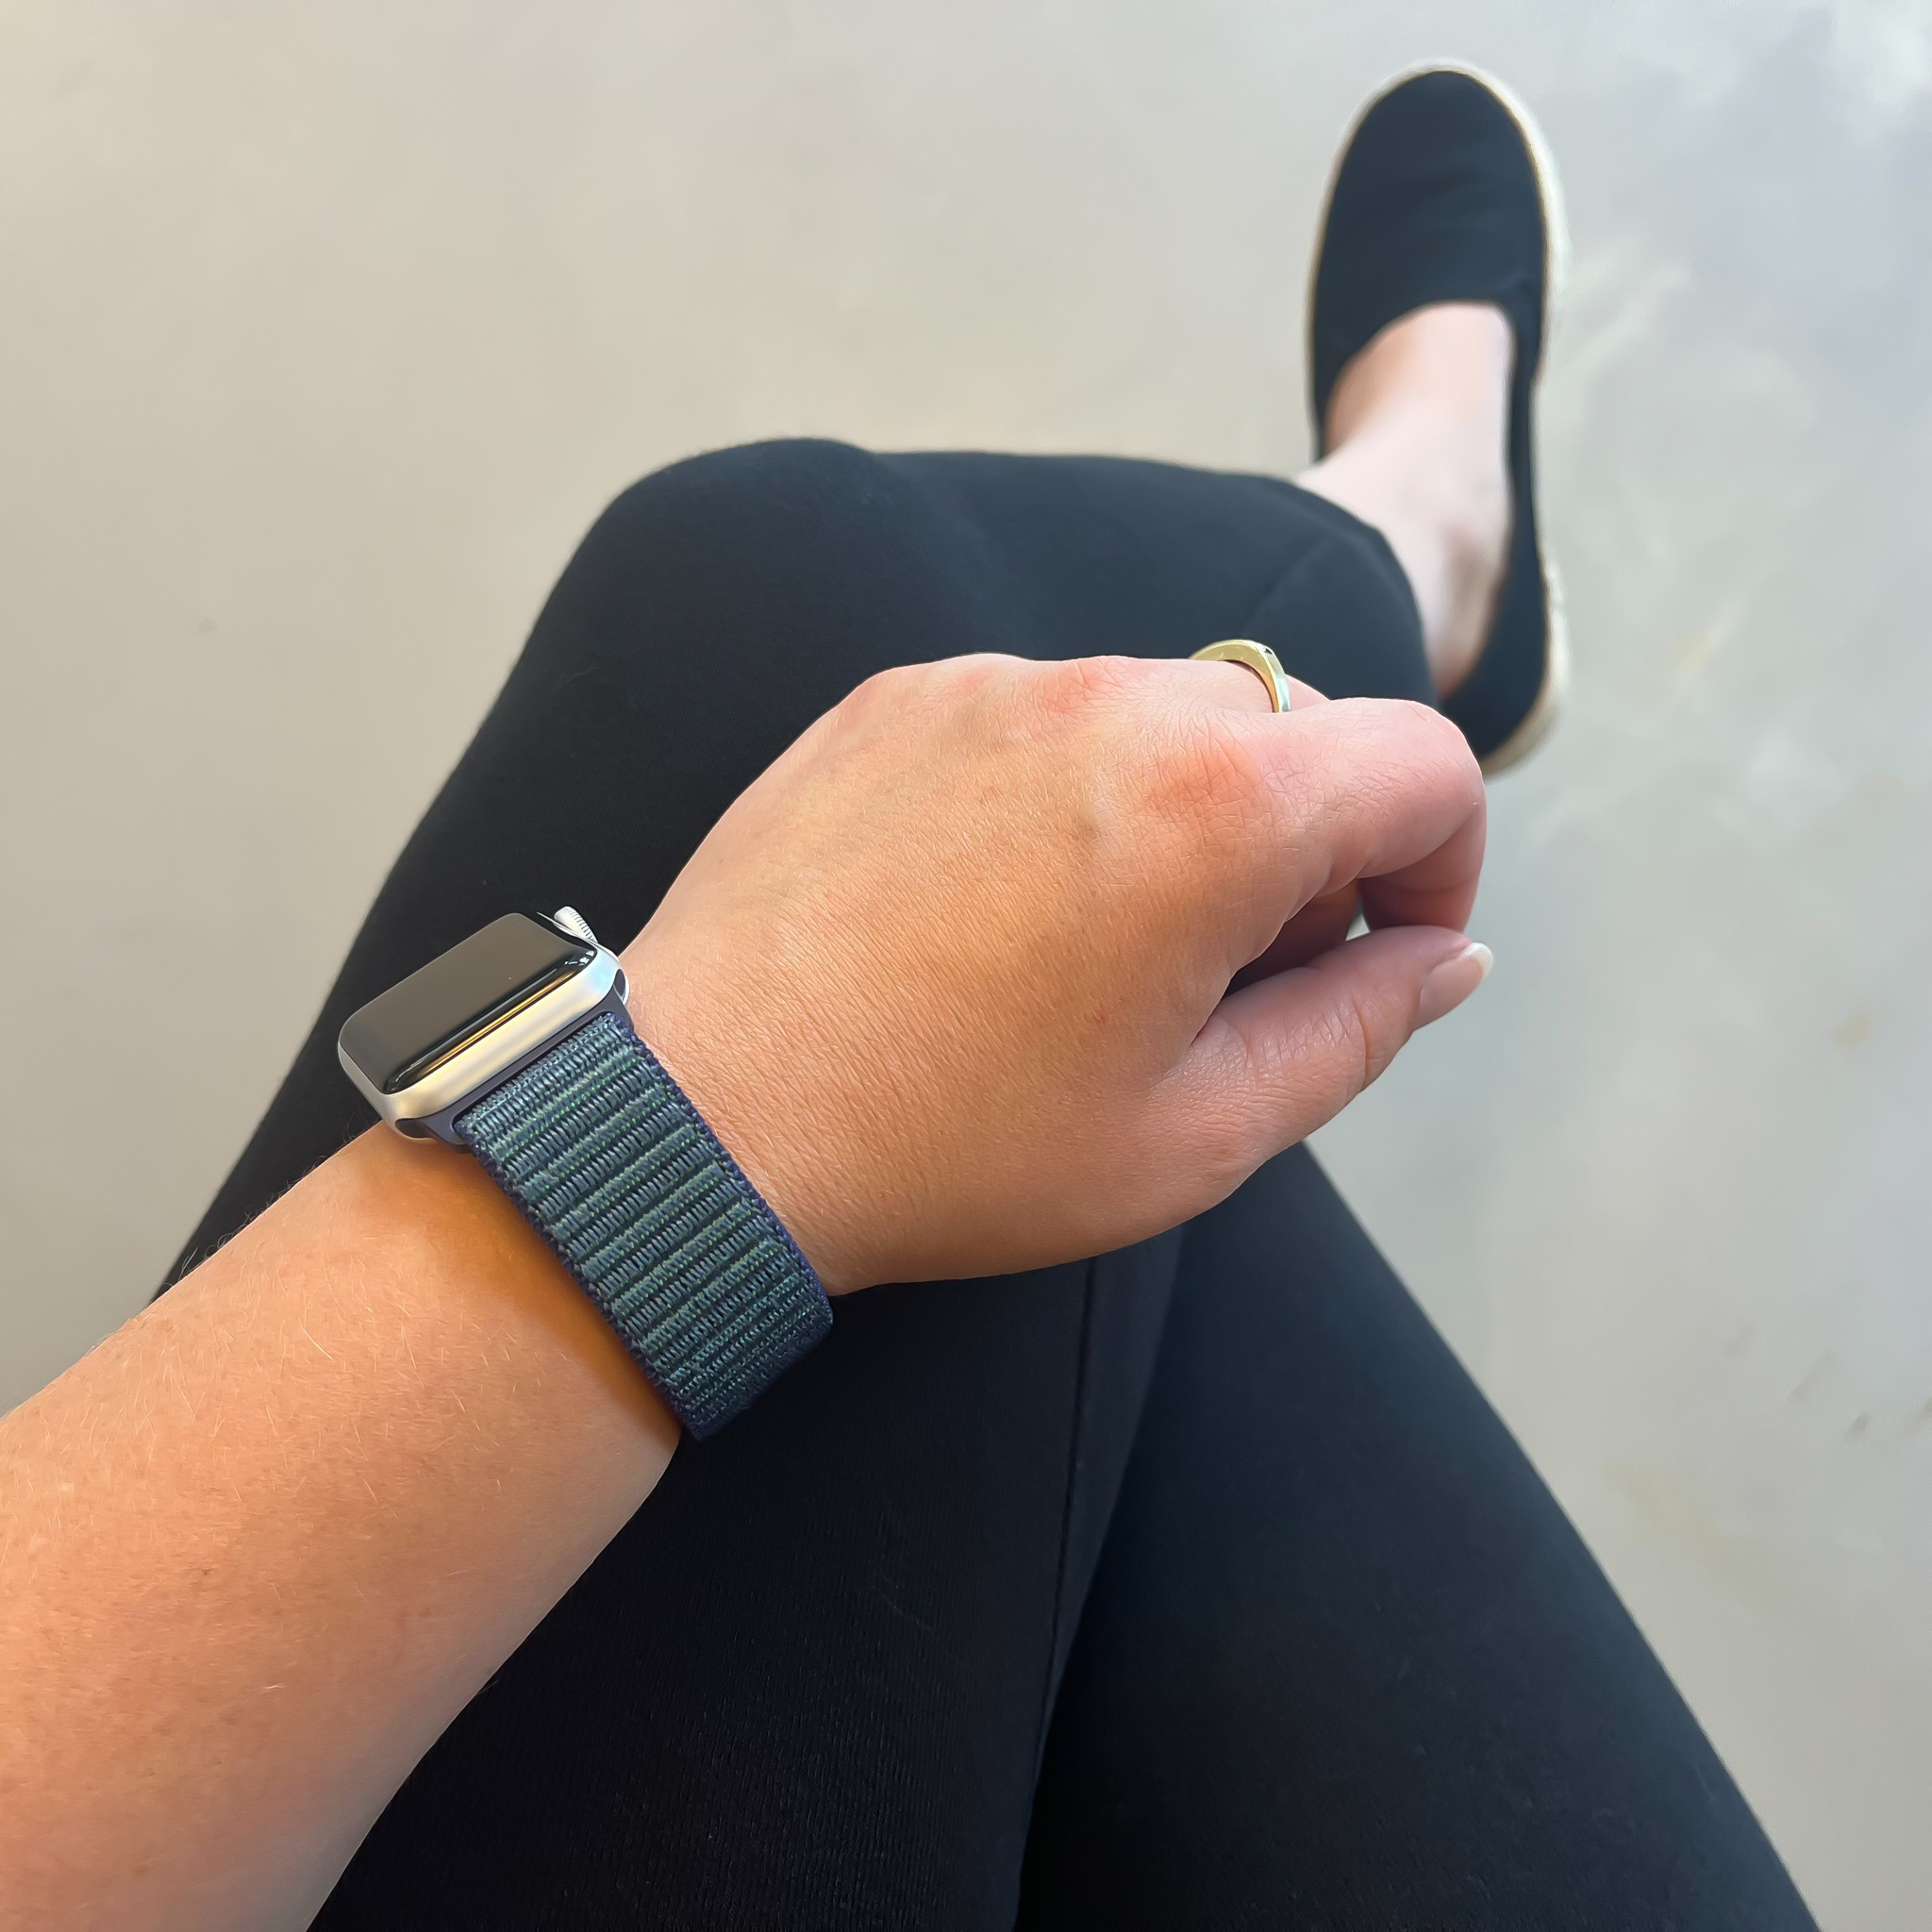 Apple Watch nylon geweven sport band  - grijs